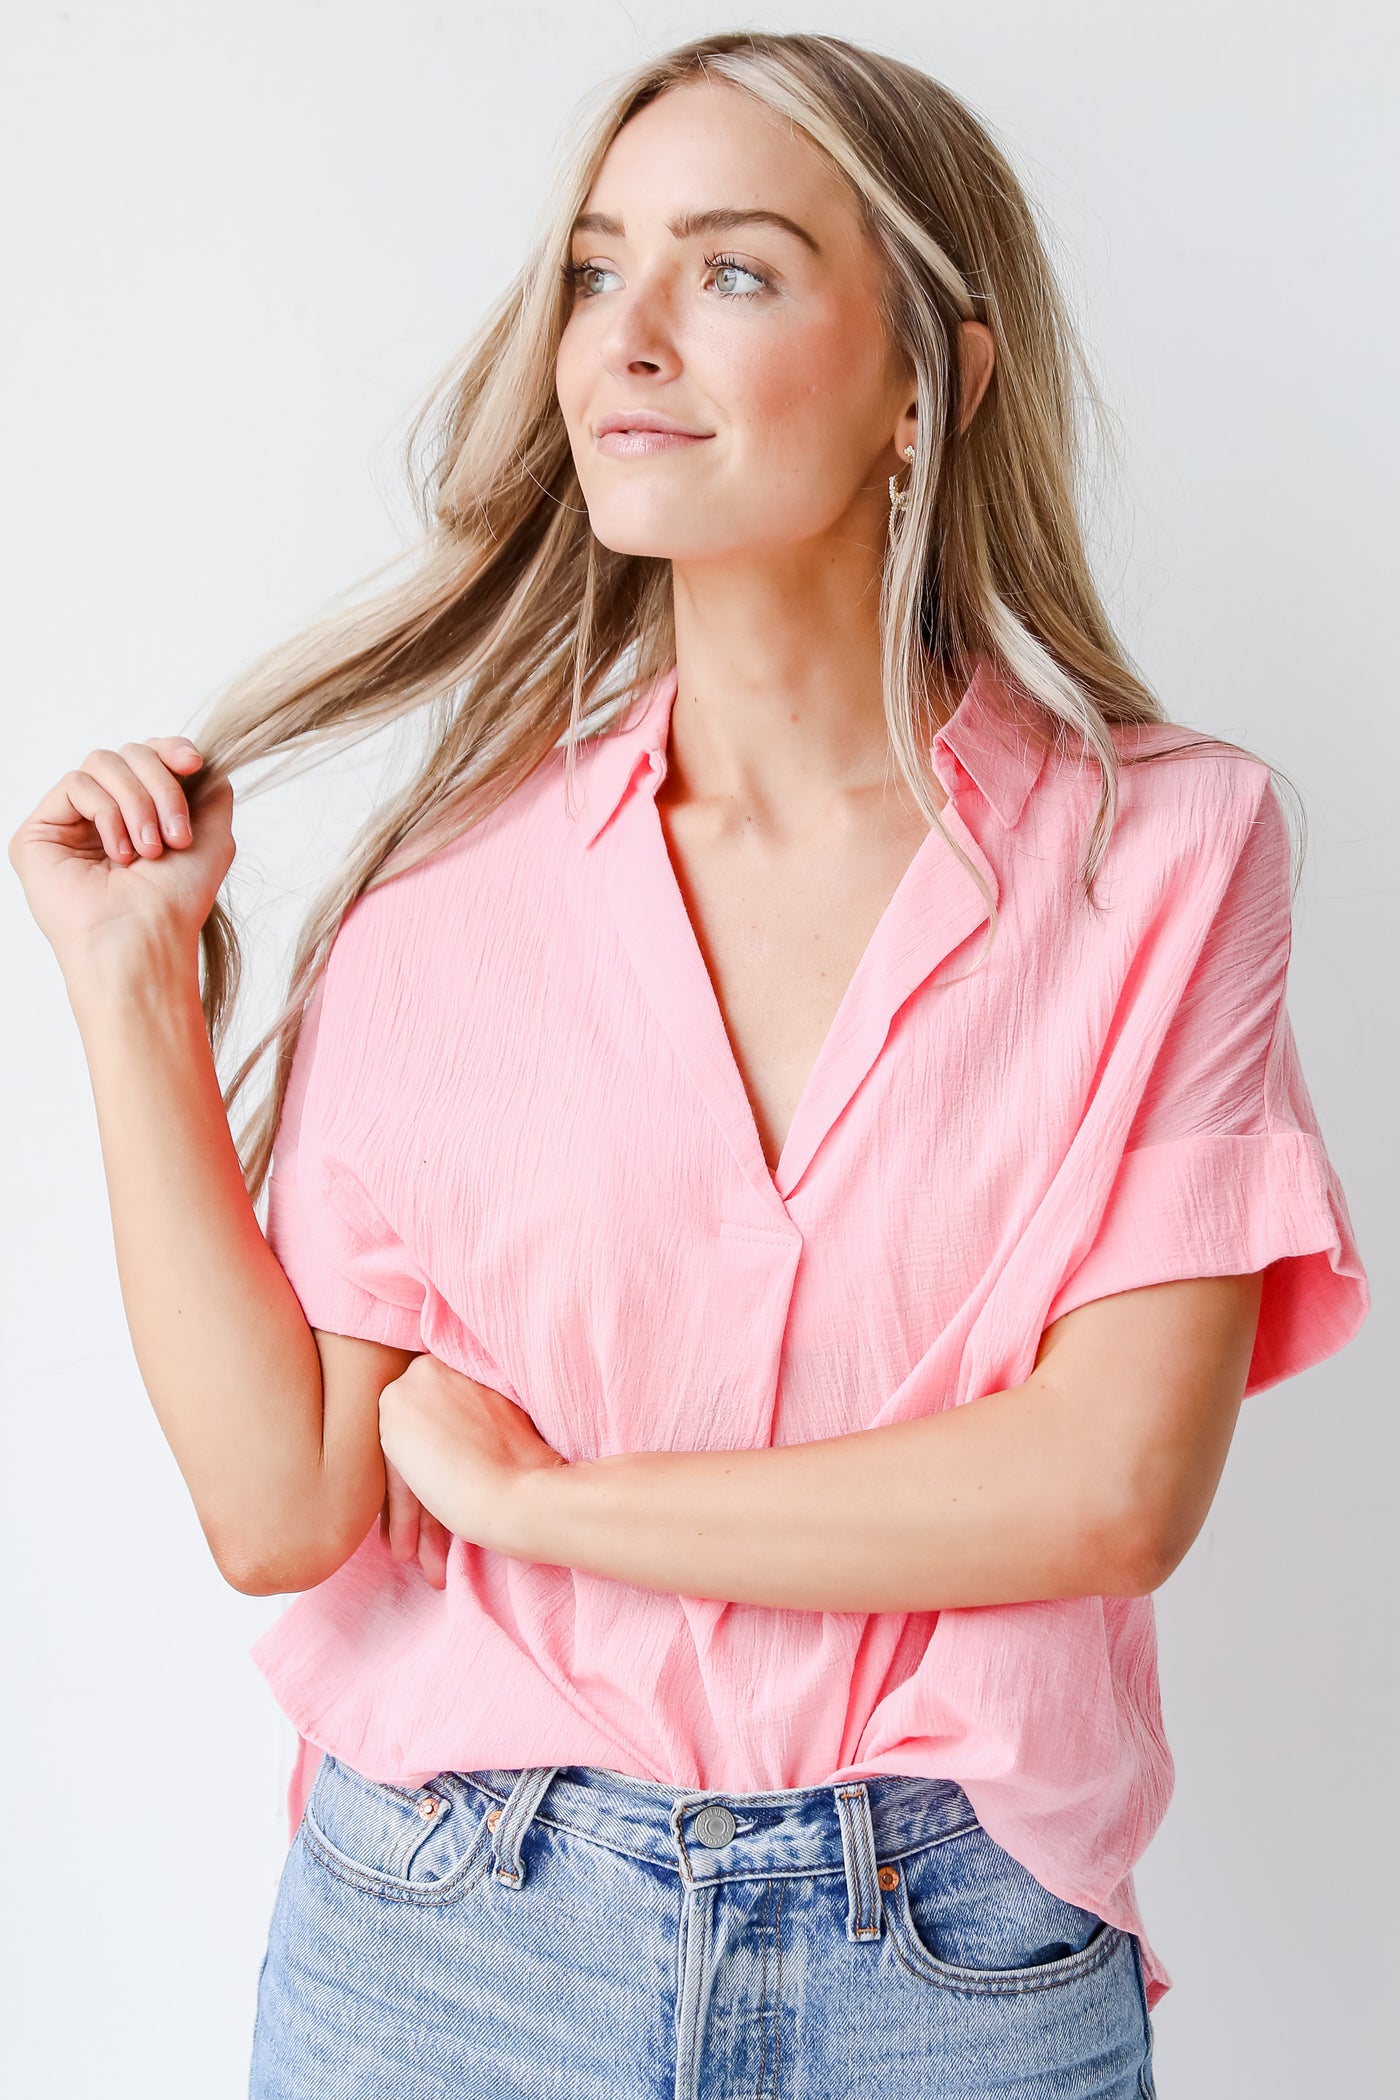 Linen Blouse in pink on model